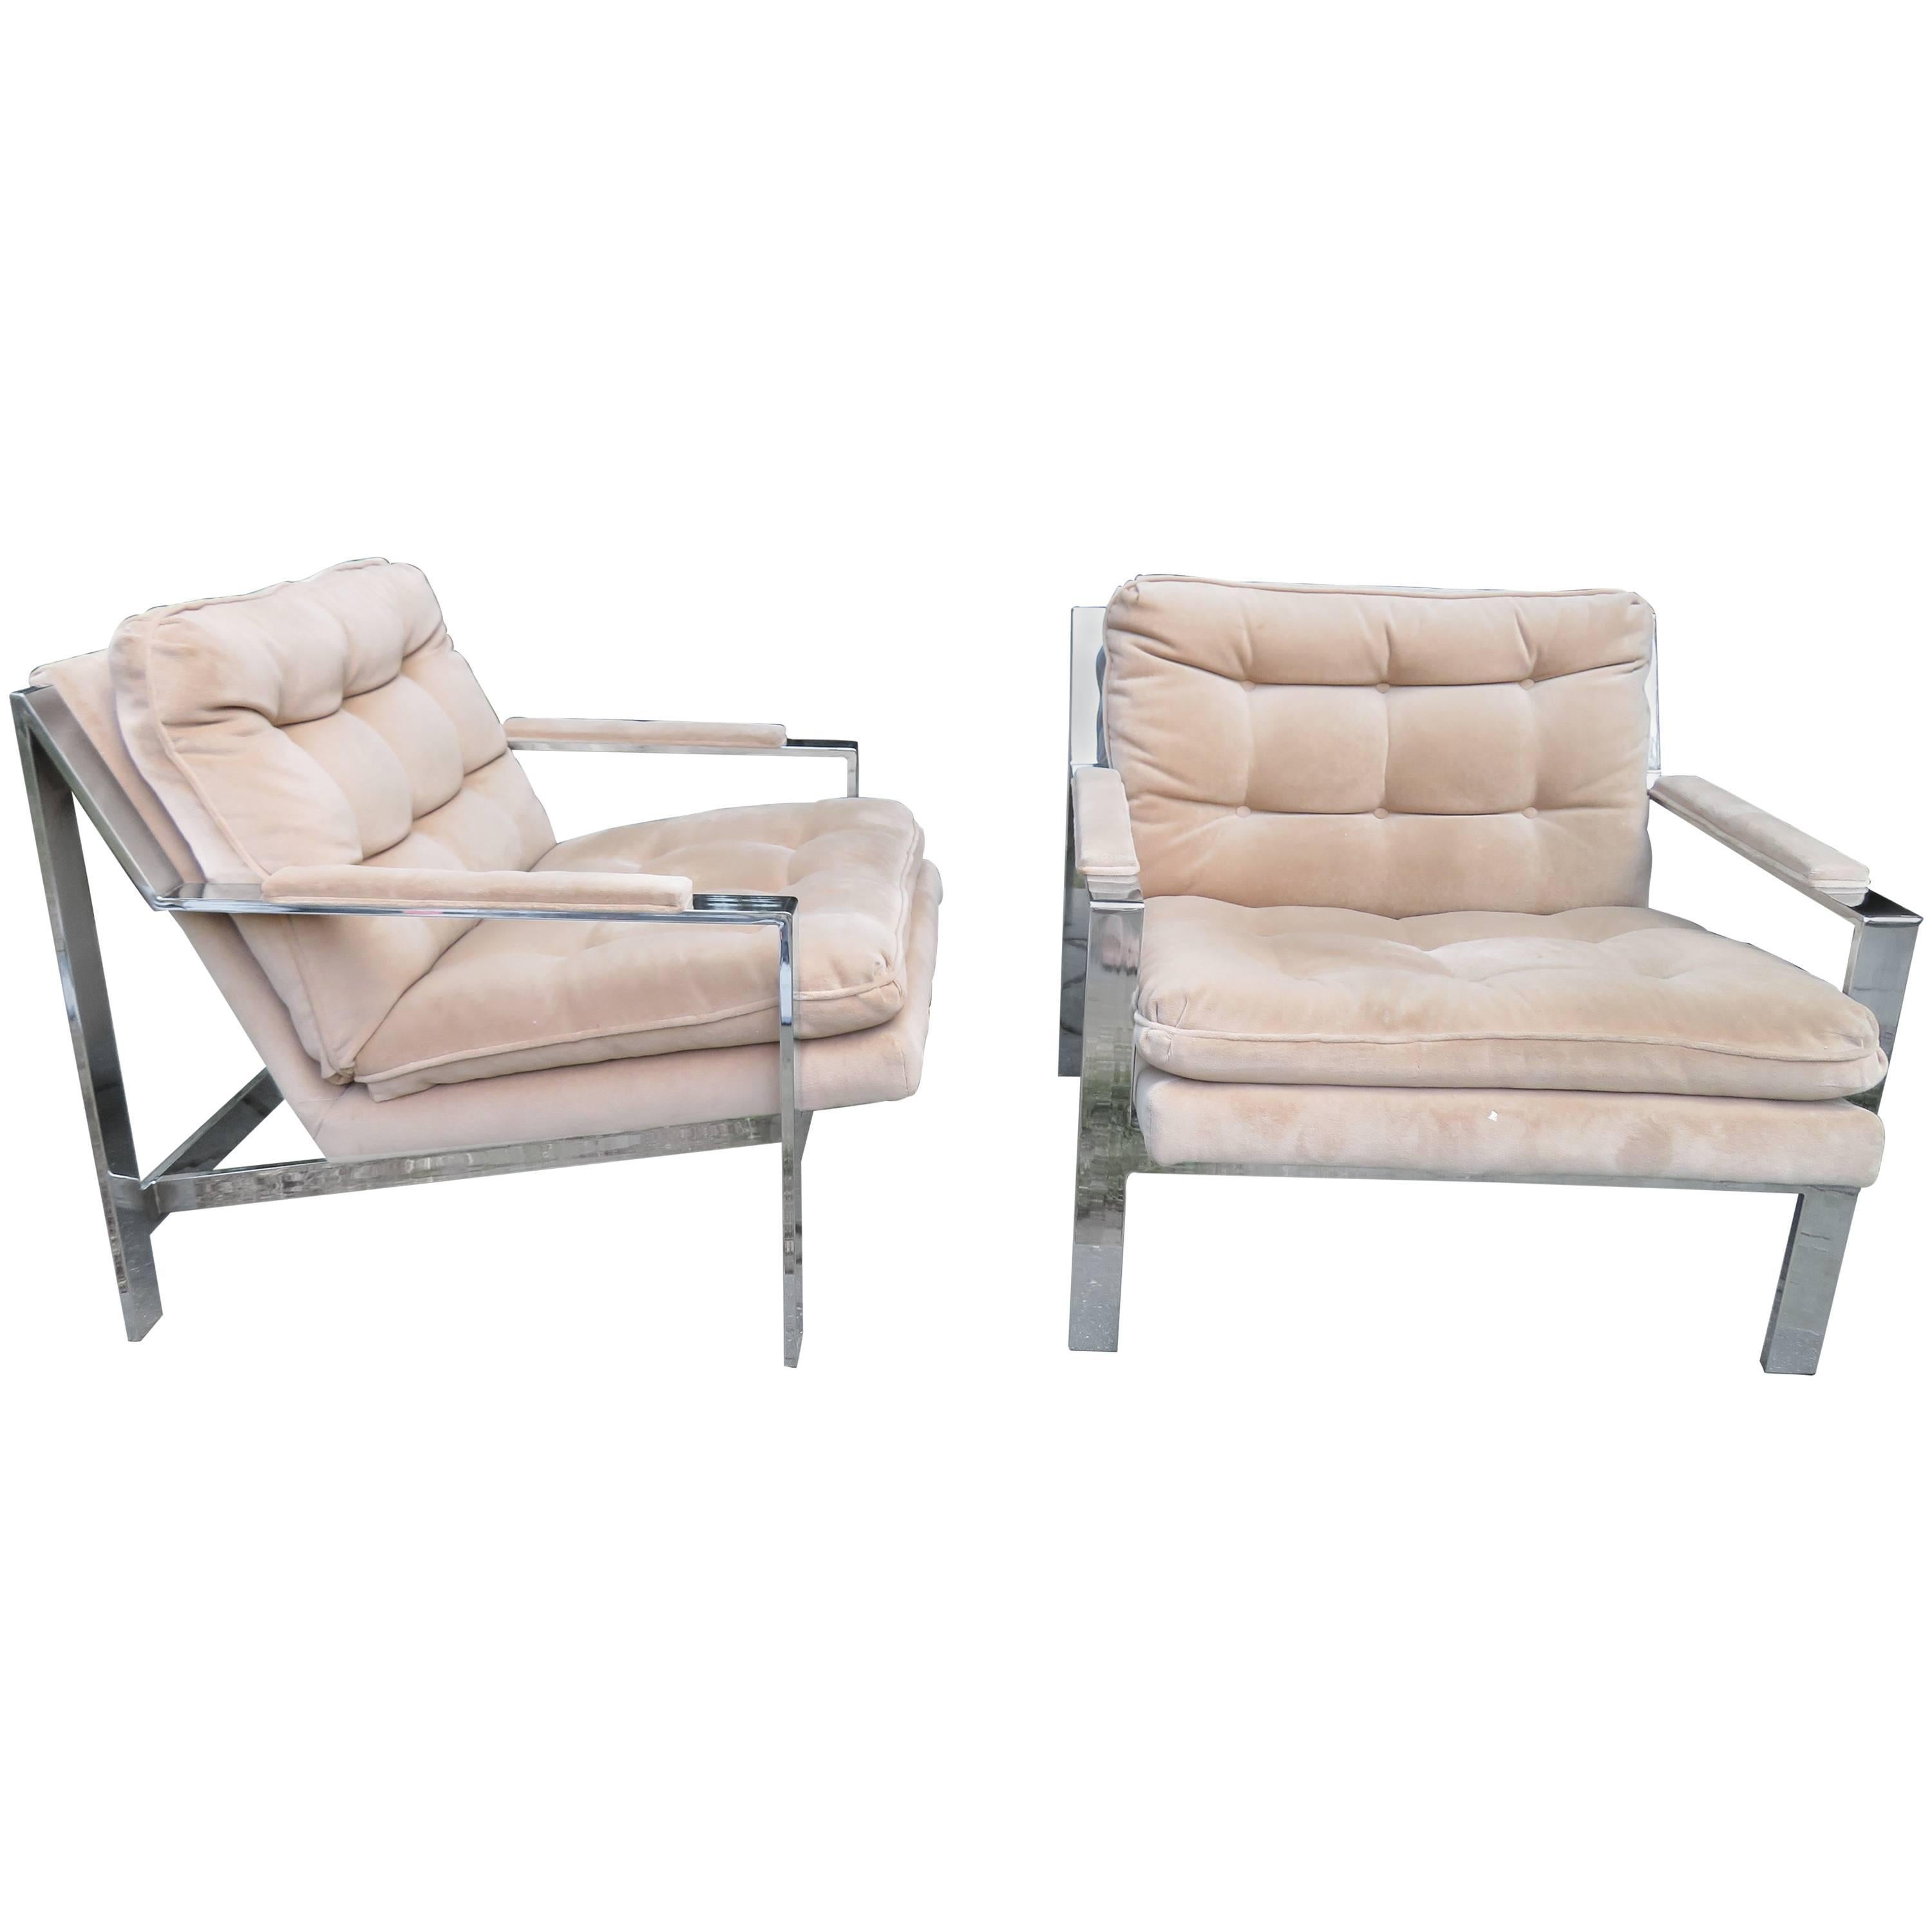 Pair of Milo Baughman Style Chrome Flat Bar Lounge Chairs, Mid-Century Modern